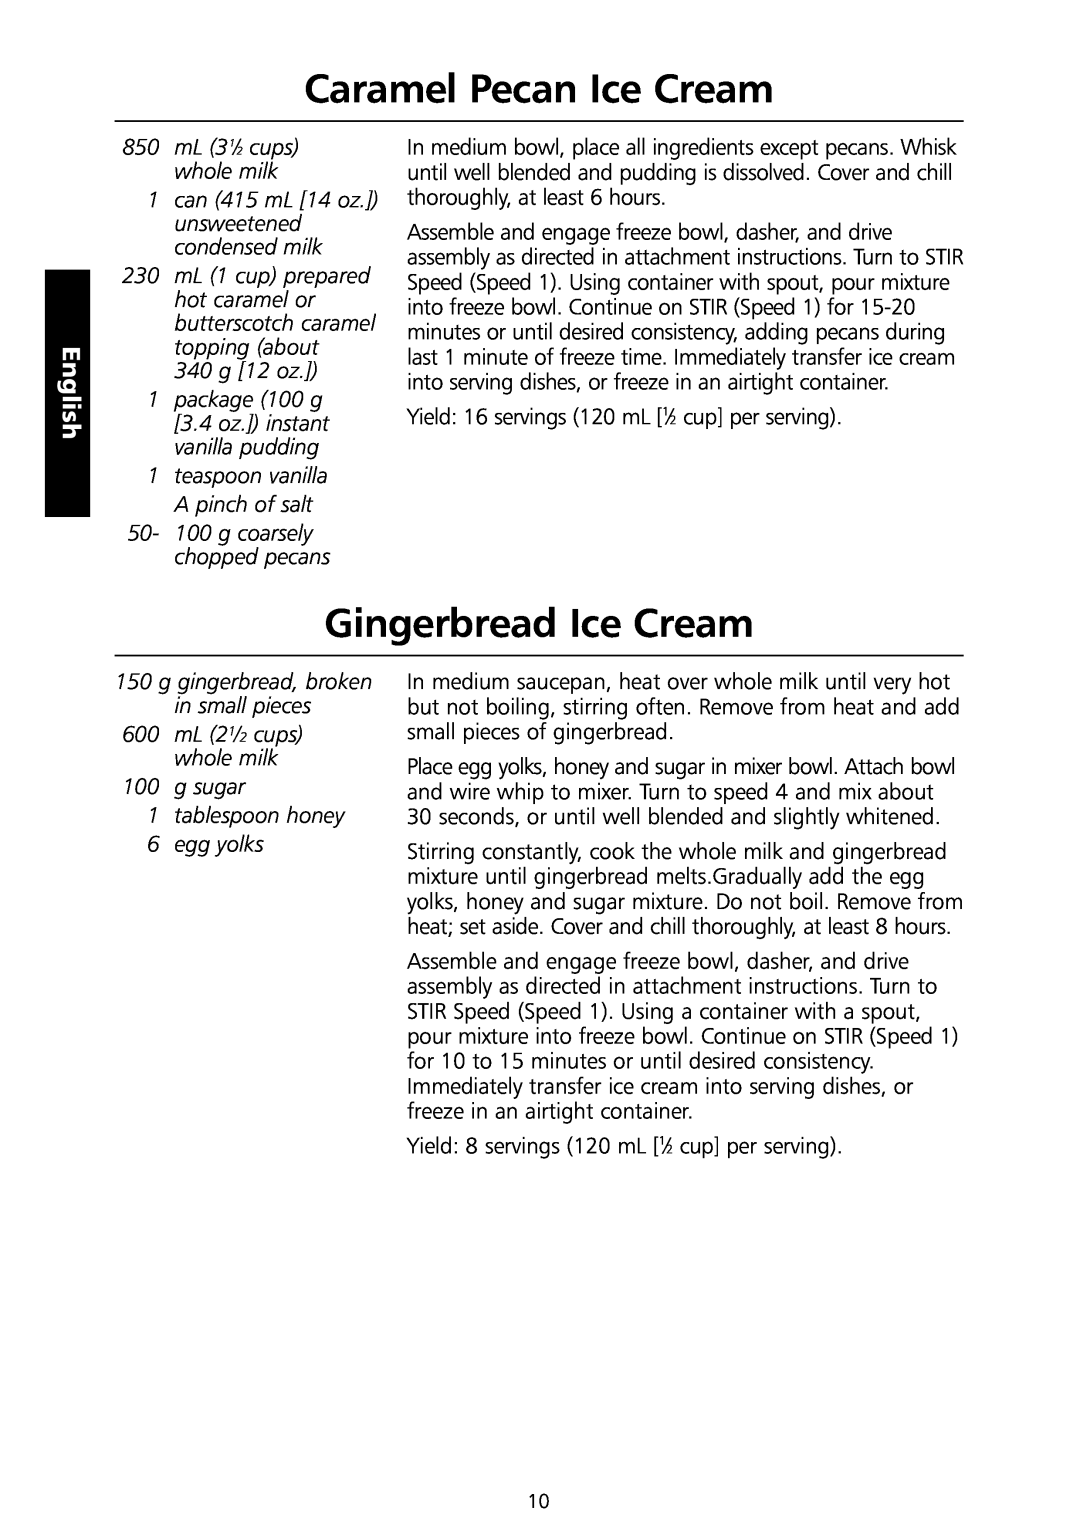 KitchenAid 5KICA0WH Caramel Pecan Ice Cream, Gingerbread Ice Cream, English, can 415 mL 14 oz. unsweetened condensed milk 